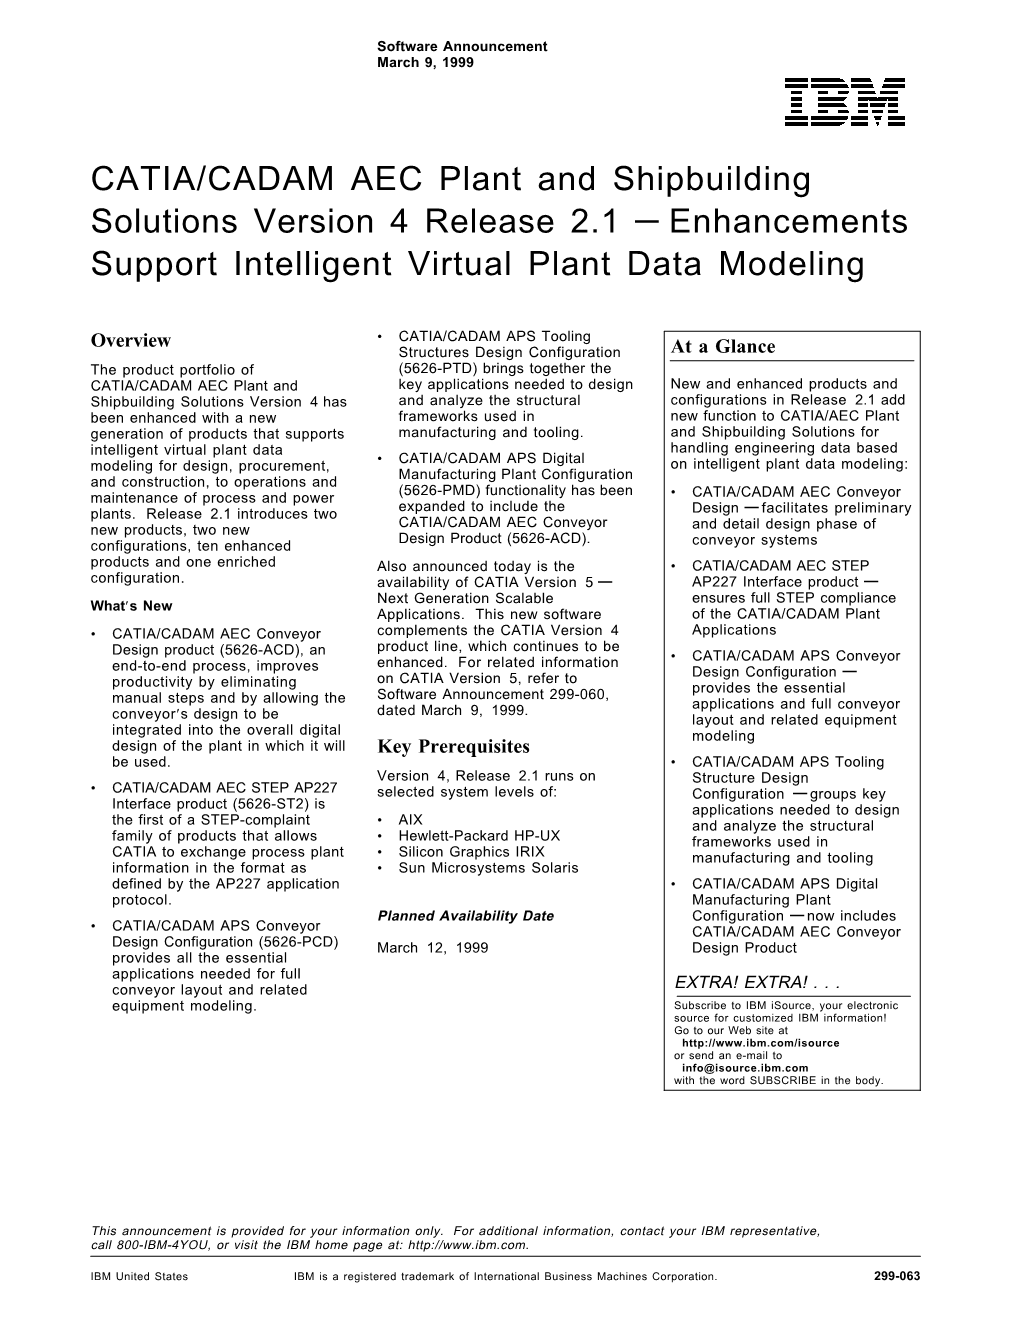 CATIA/CADAM AEC Plant and Shipbuilding Solutions Version 4 Release 2.1 — Enhancements Support Intelligent Virtual Plant Data Modeling